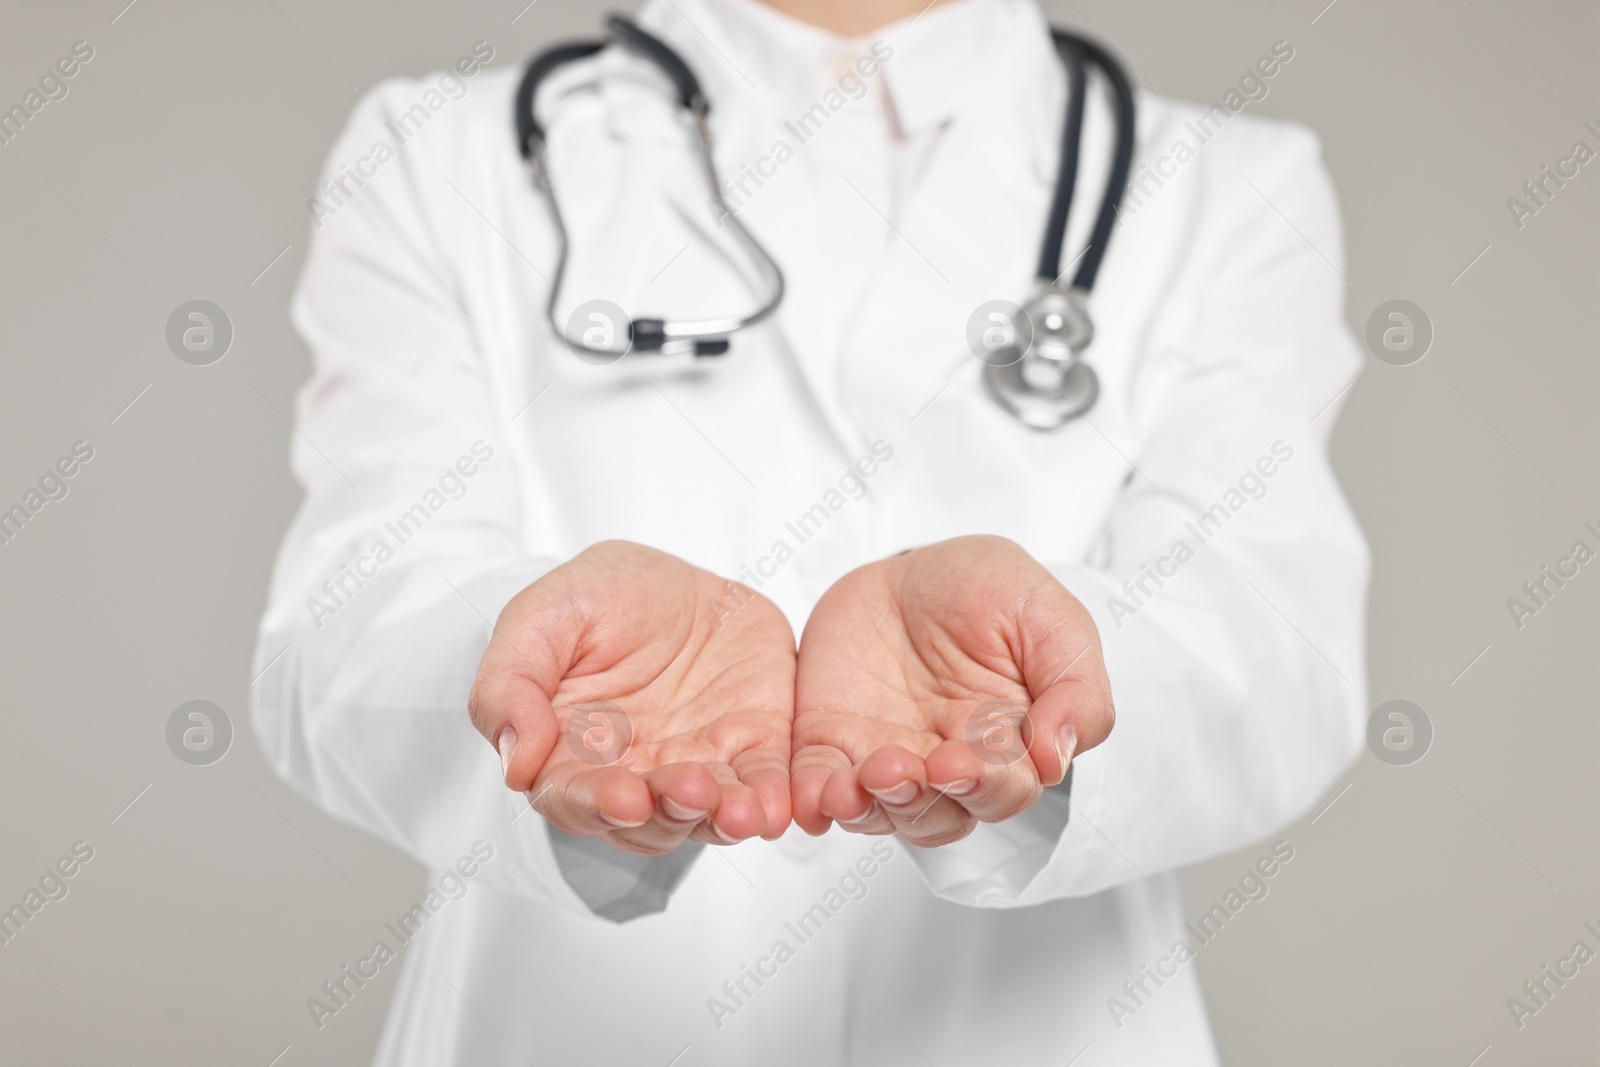 Photo of Doctor with stethoscope holding something on grey background, closeup